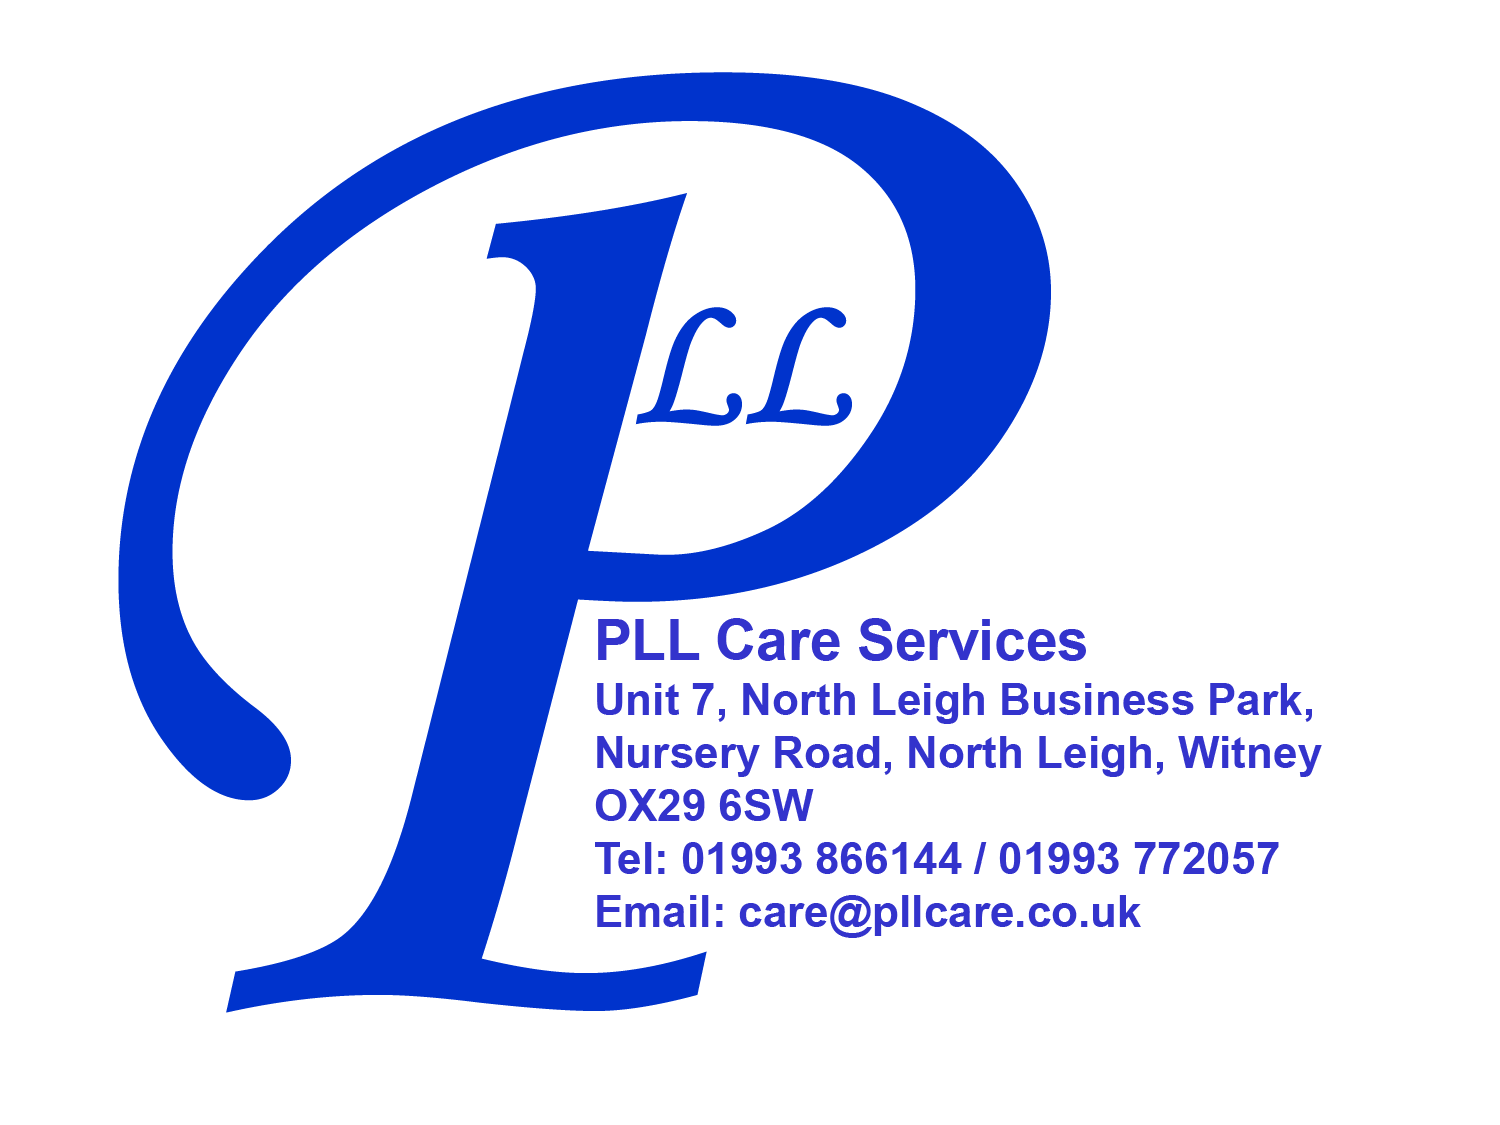 PLL Care Services